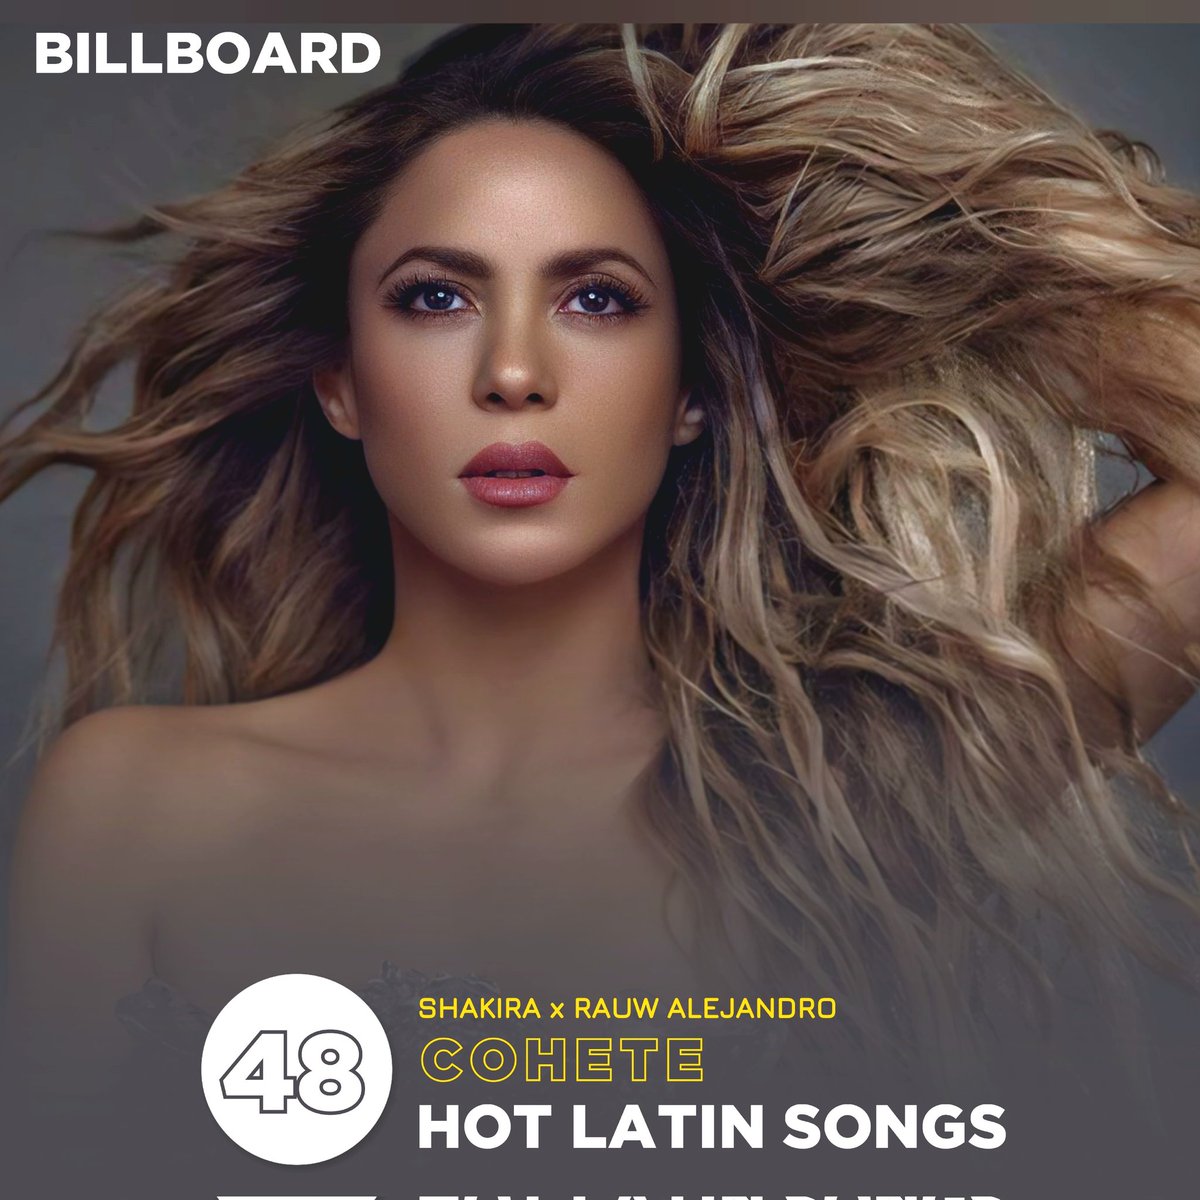 🇺🇲 | COHETE de @shakira x @rauwalejandro debuta en el puesto #48 en la lista Hot Latin Songs de @billboard.

Escuchar:open.spotify.com/album/3fonA82H…

@billboardcharts @billboardlatin @SonyMusicLatin #LasMujeresYaNoLloran #ShakiraCharts